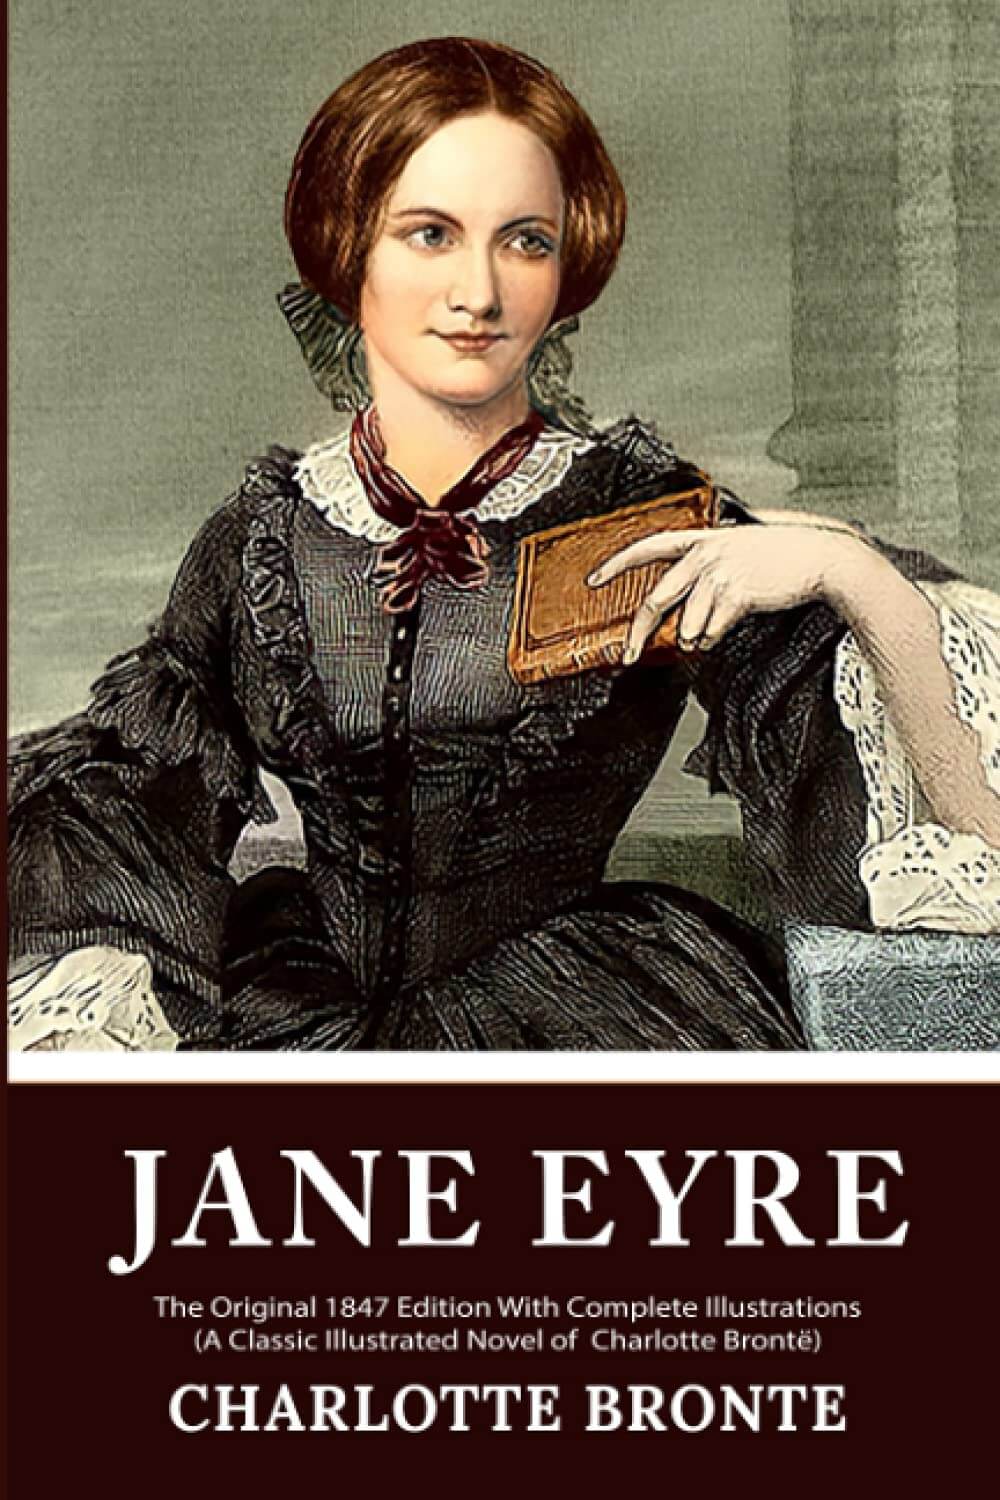 "Jane Eyre" by Charlotte Bronte